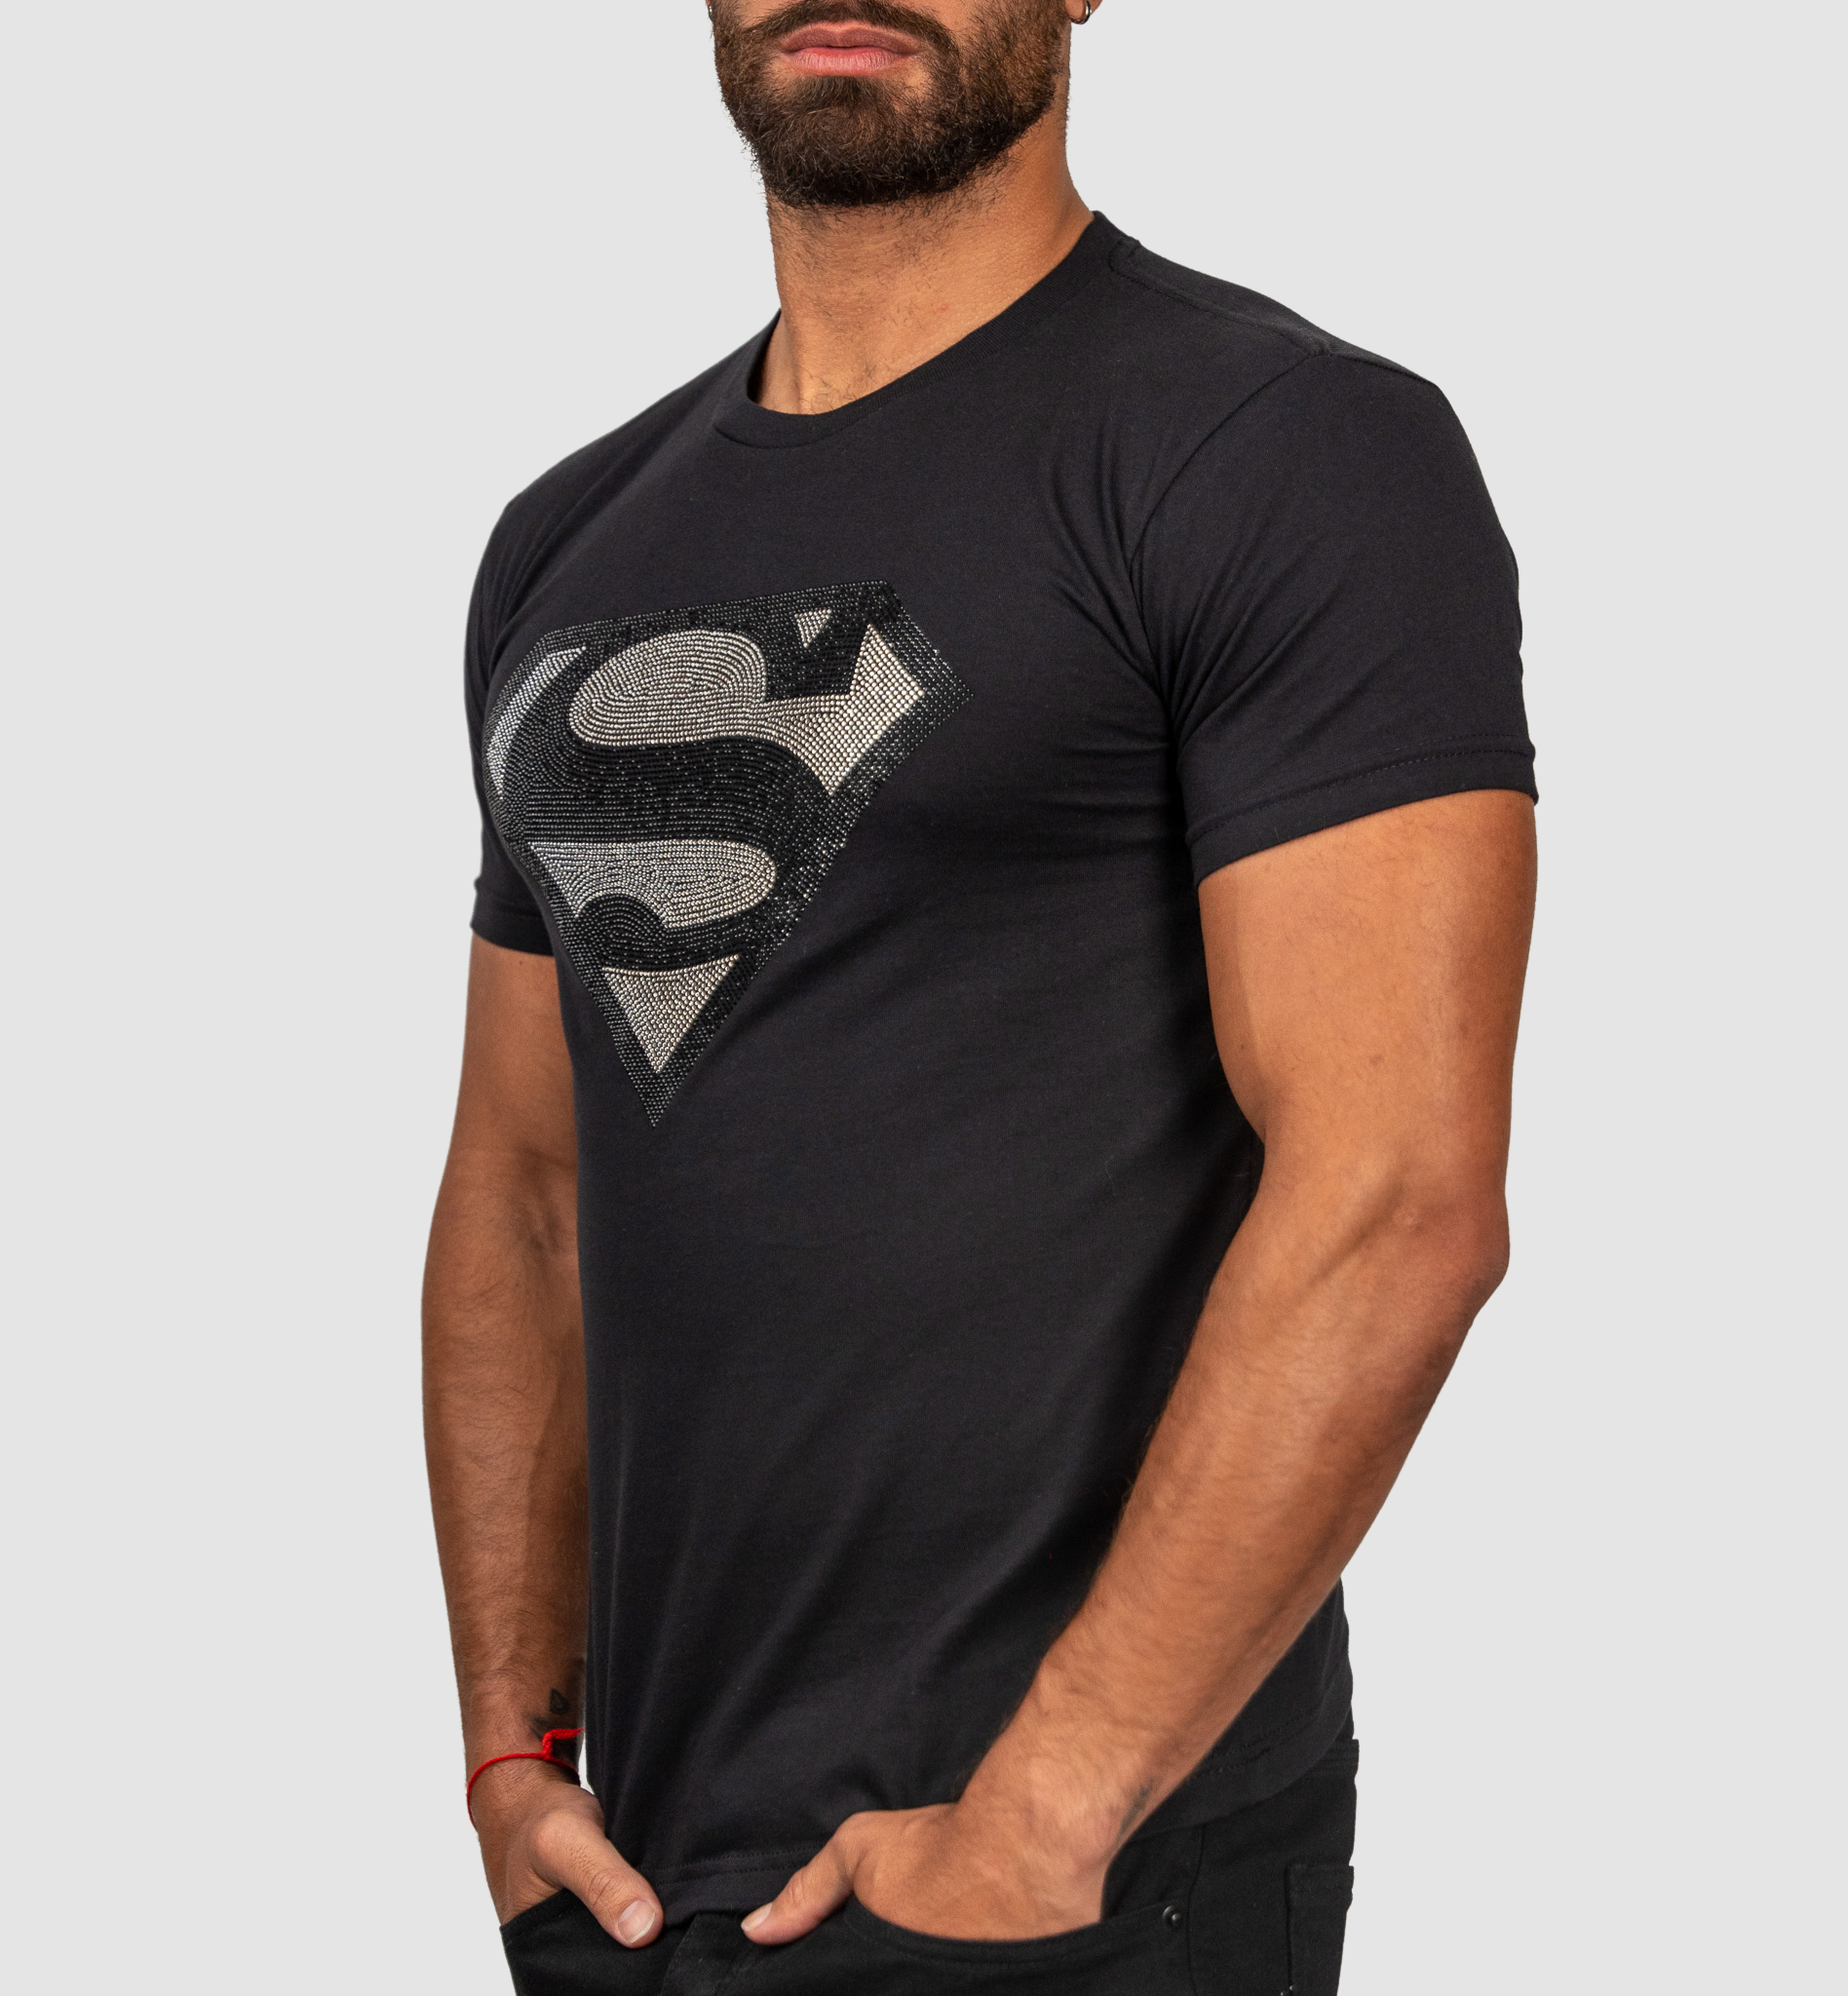 ADDICTED Superman Black/Silver Man